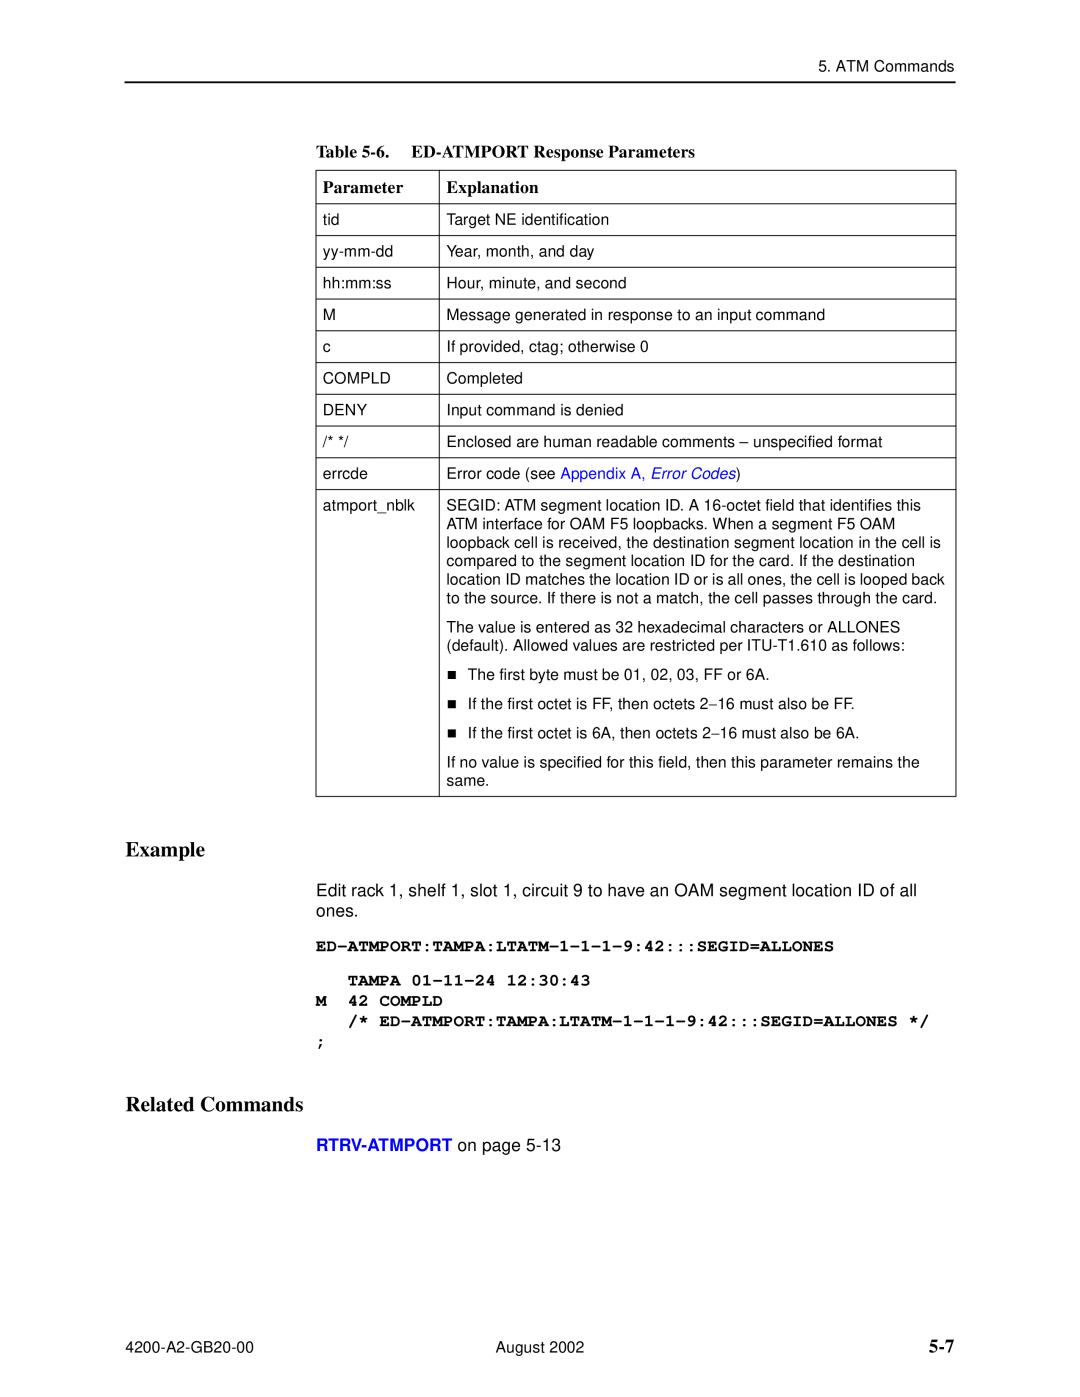 Paradyne 4200 manual 6. ED-ATMPORT Response Parameters, ED-ATMPORTTAMPALTATM-1-1-1-942SEGID=ALLONES TAMPA 01-11-24, Example 